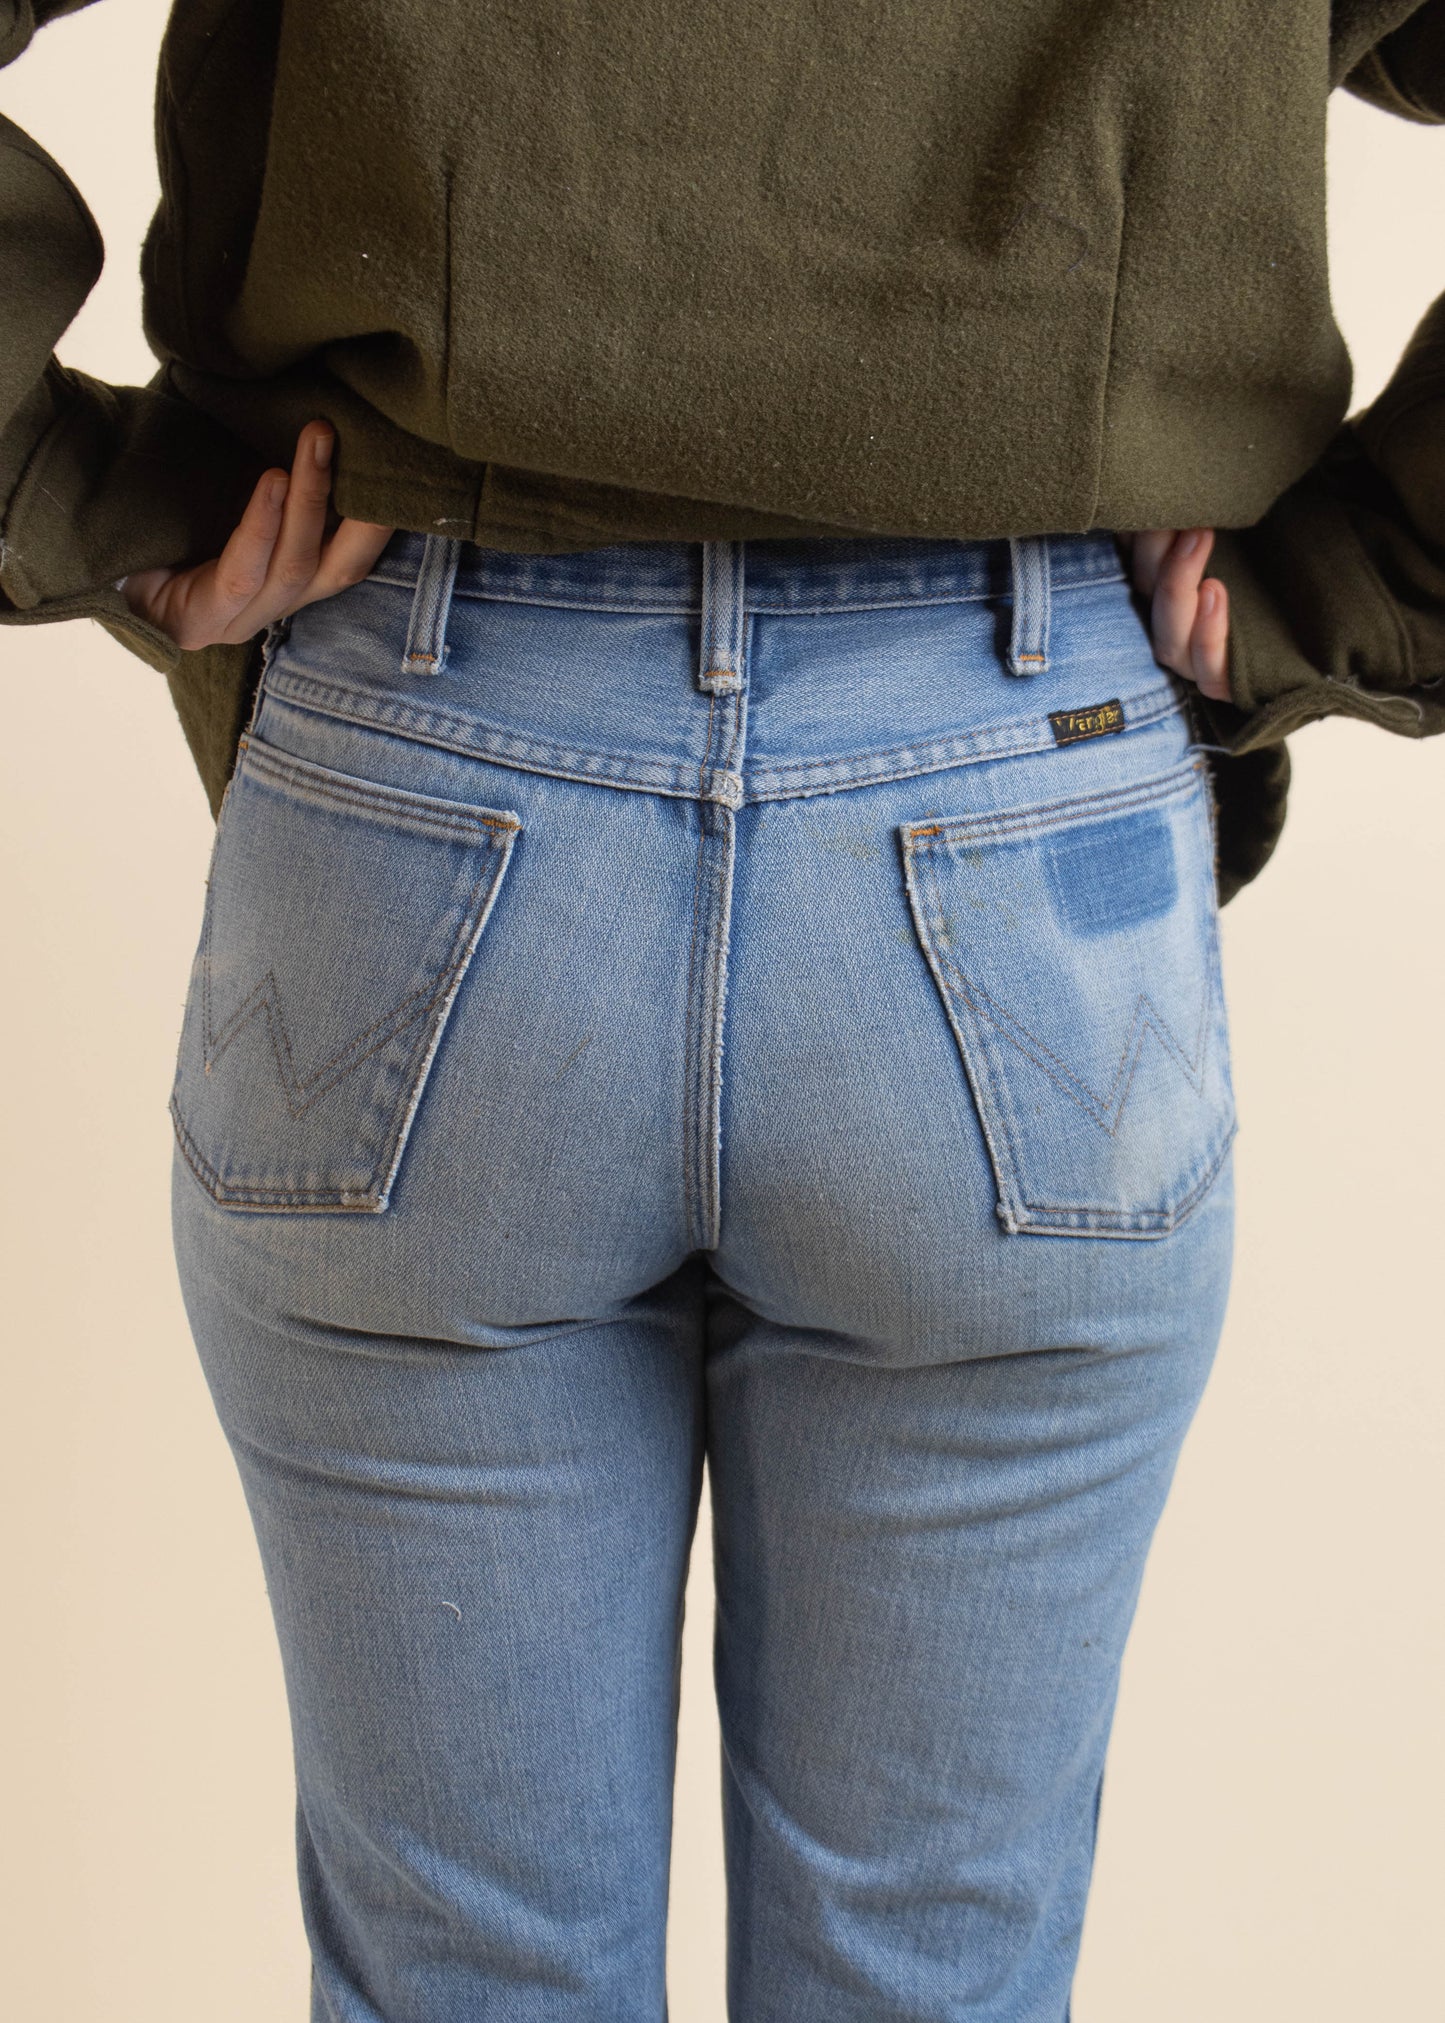 1970s Wrangler Midwash Flare Jeans Size Women's 28 Men's 31